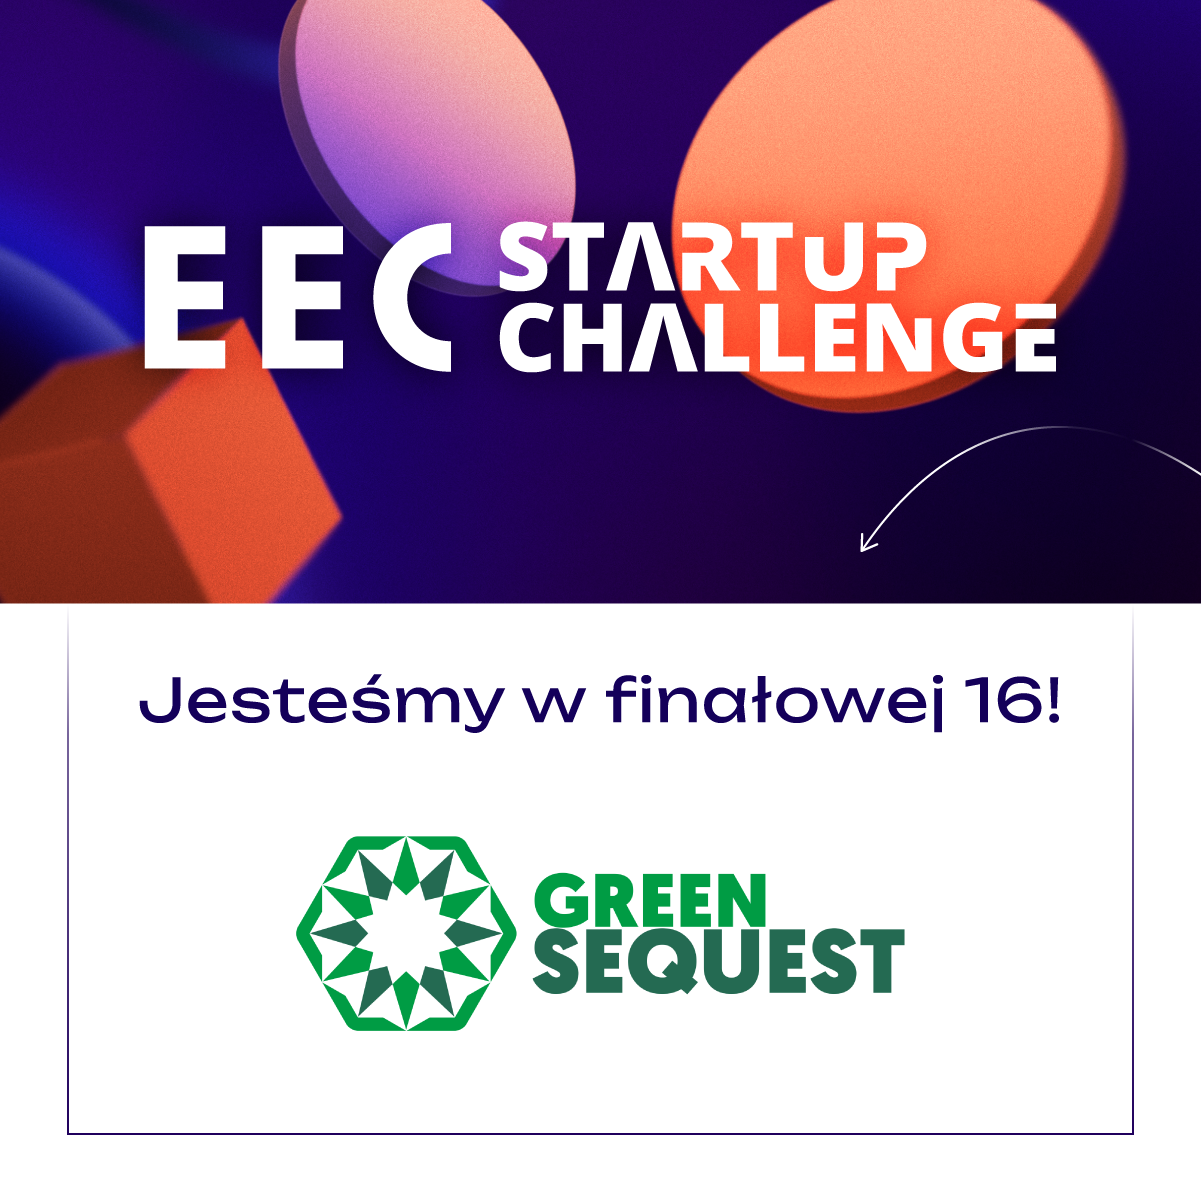 Green Sequest qualified for EEC Startup Challenge finals